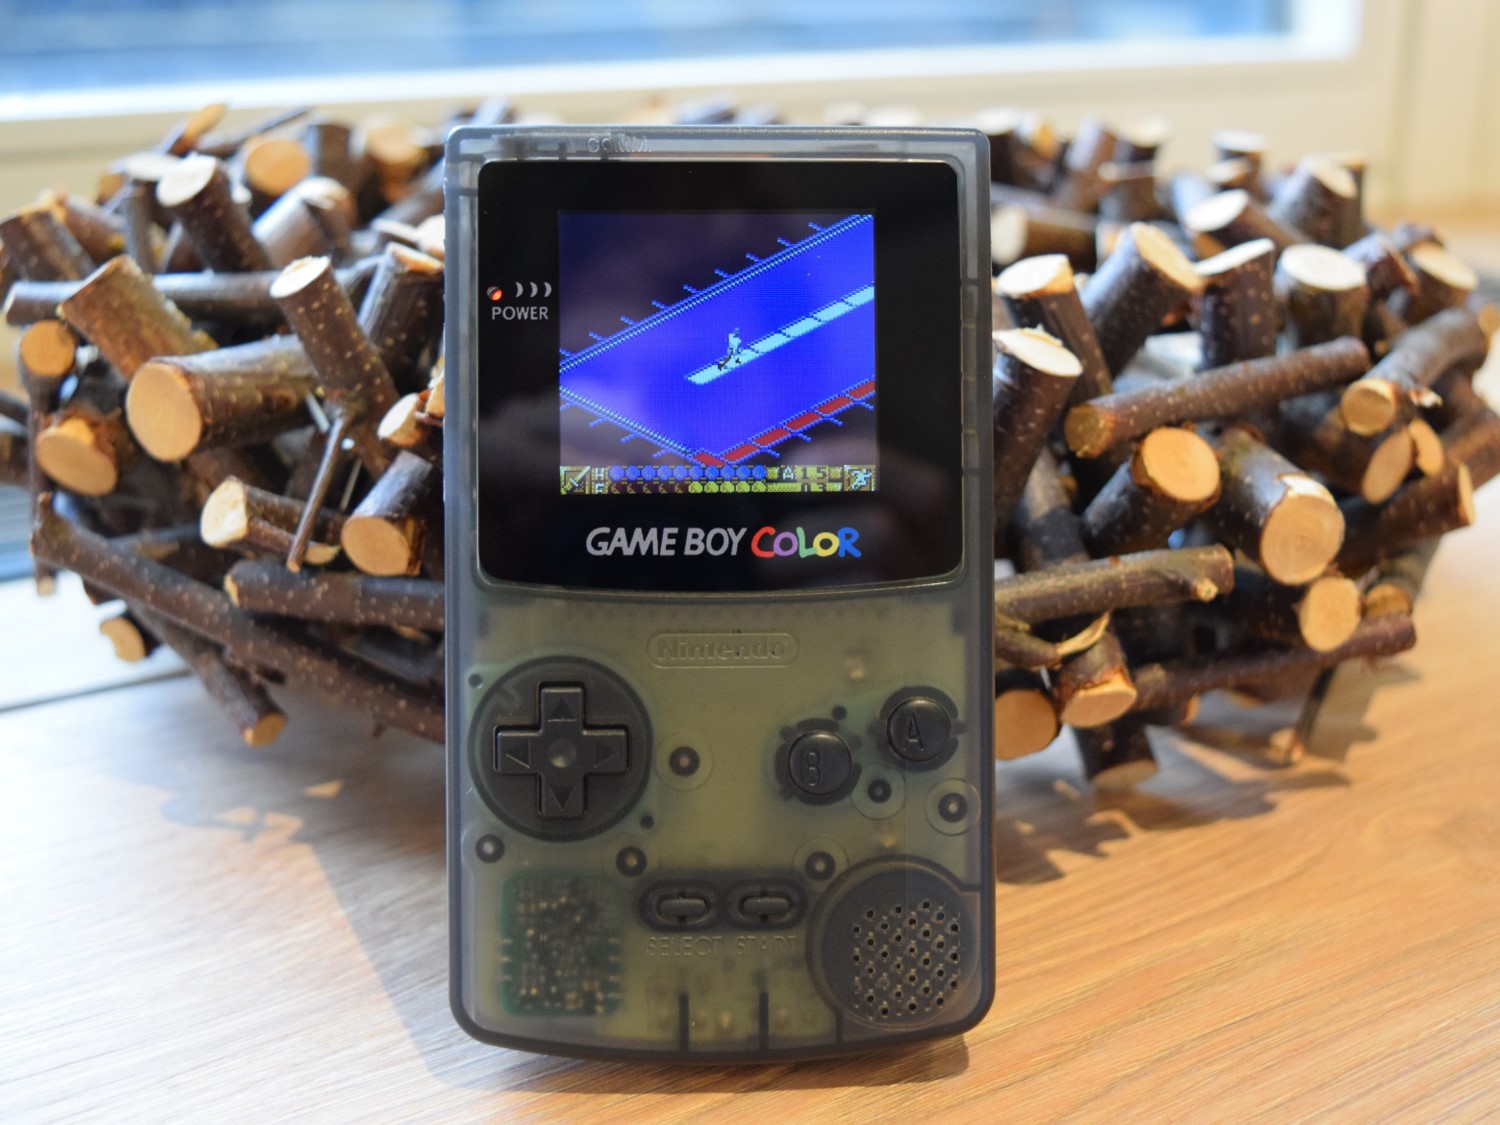 Gameboy Color IPS Blackberry Edition - Gameboy Color Hardware